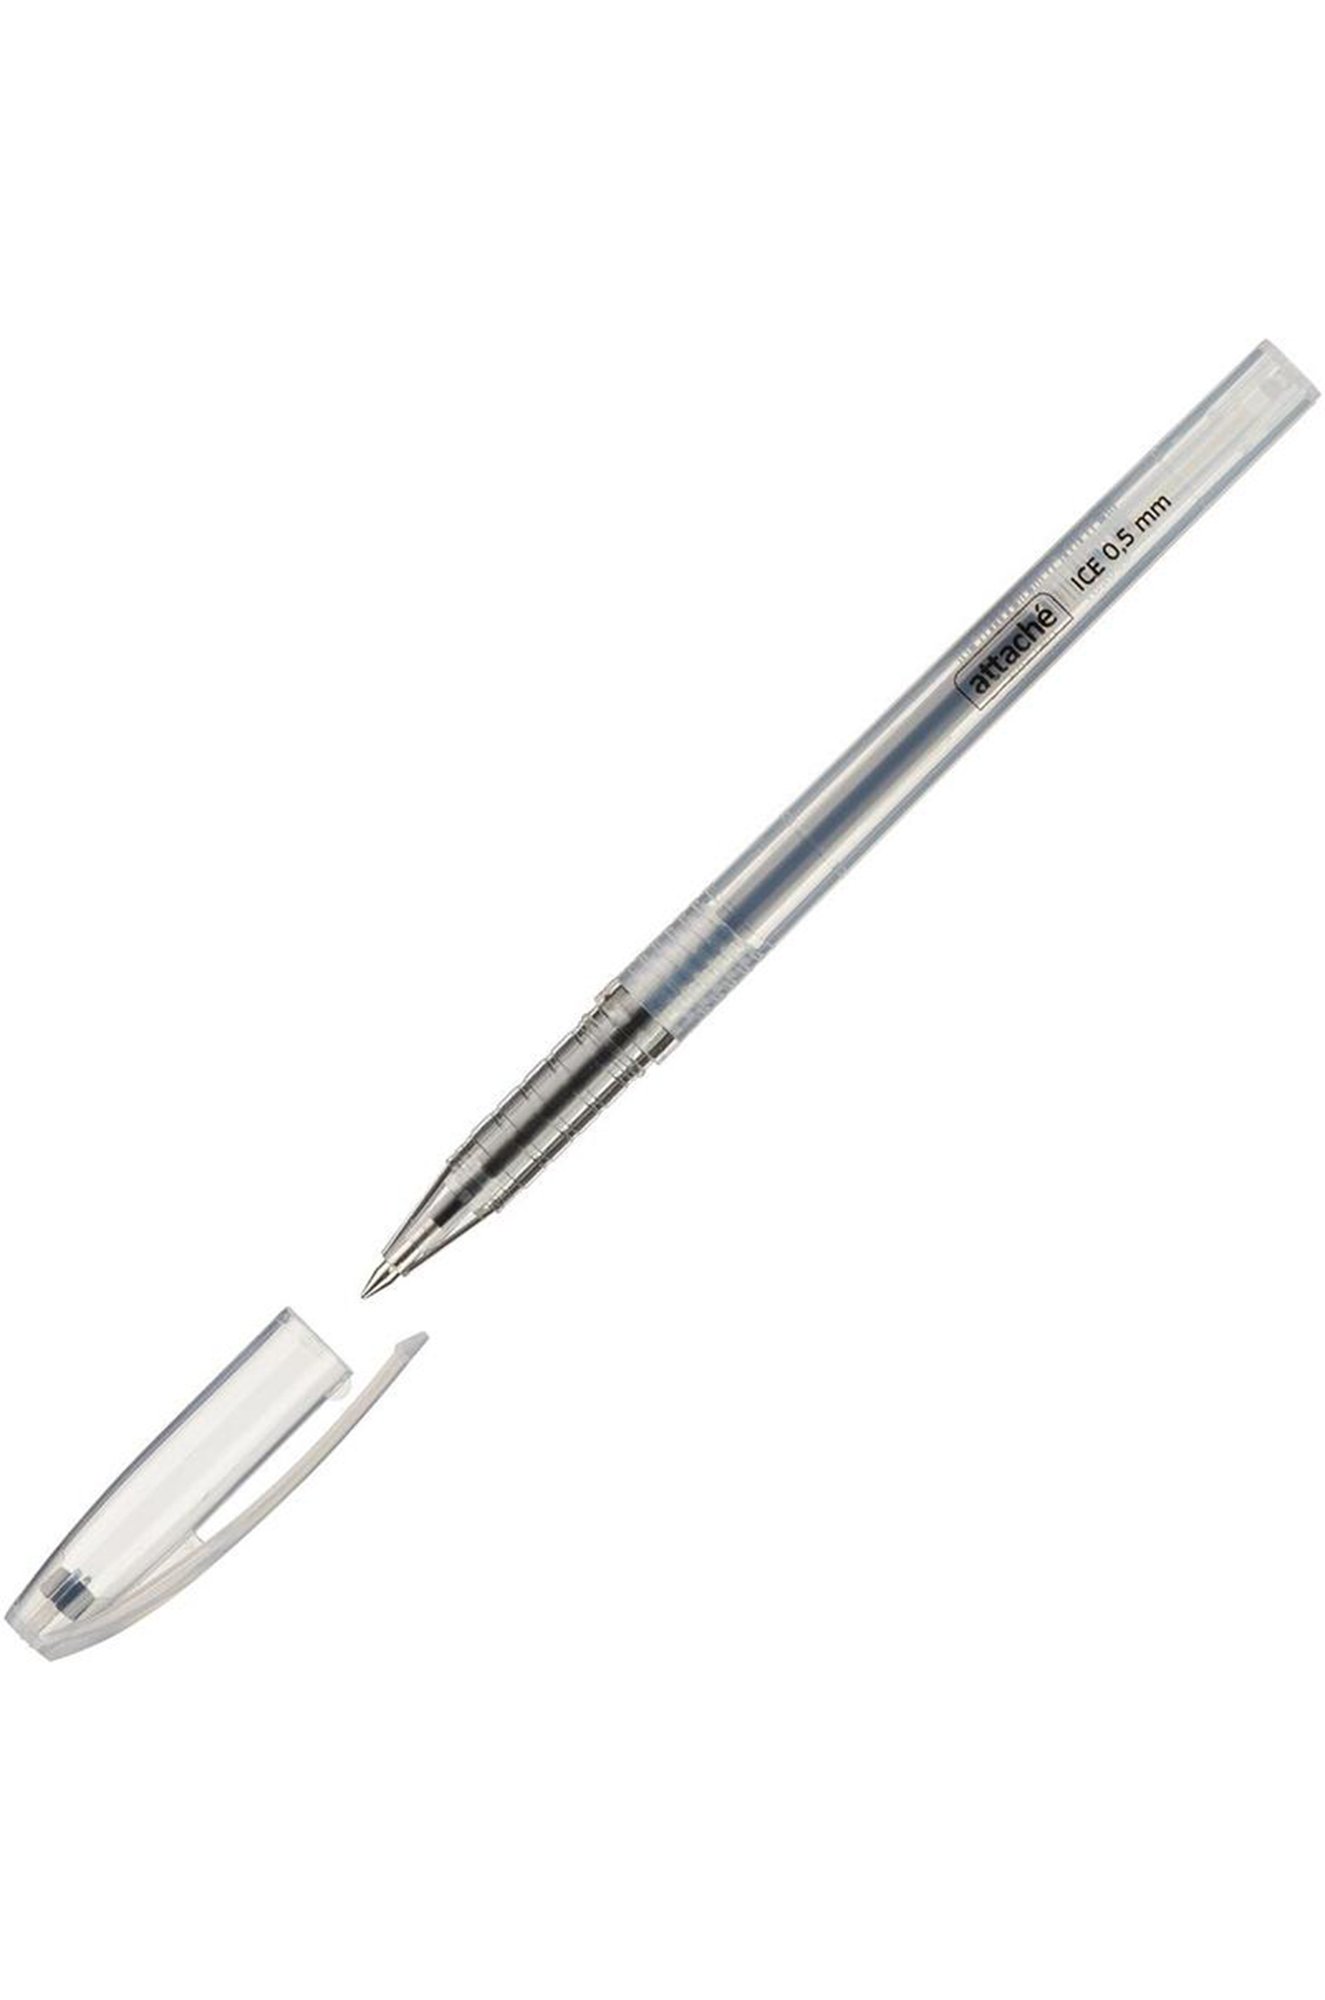 Ручка гелевая Attache